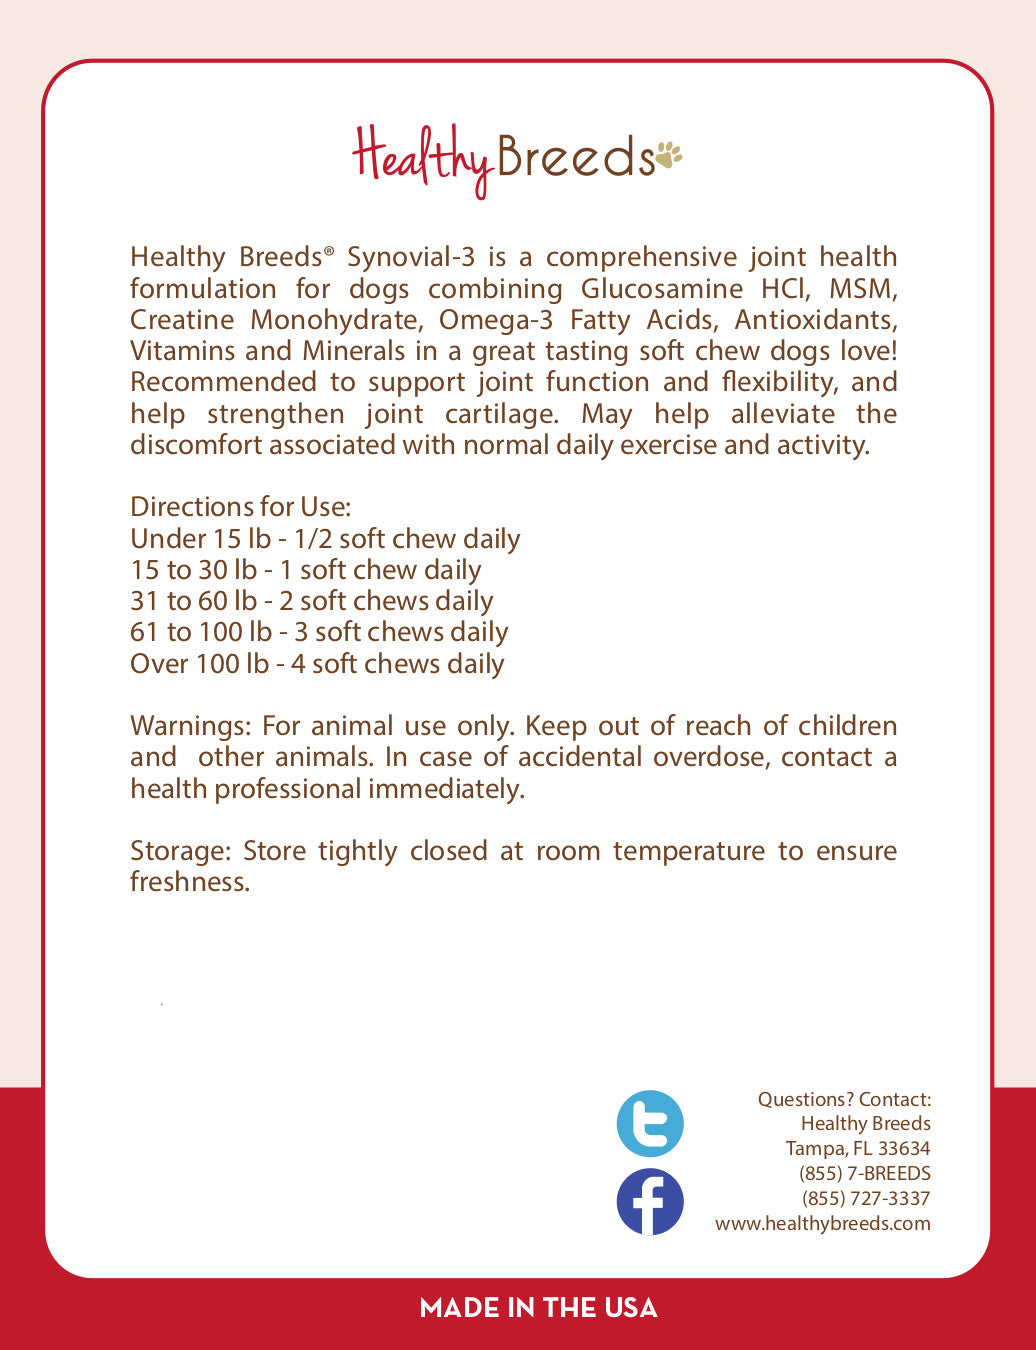 Tibetan Mastiff Synovial-3 Joint Health Formulation Soft Chews 240 Count